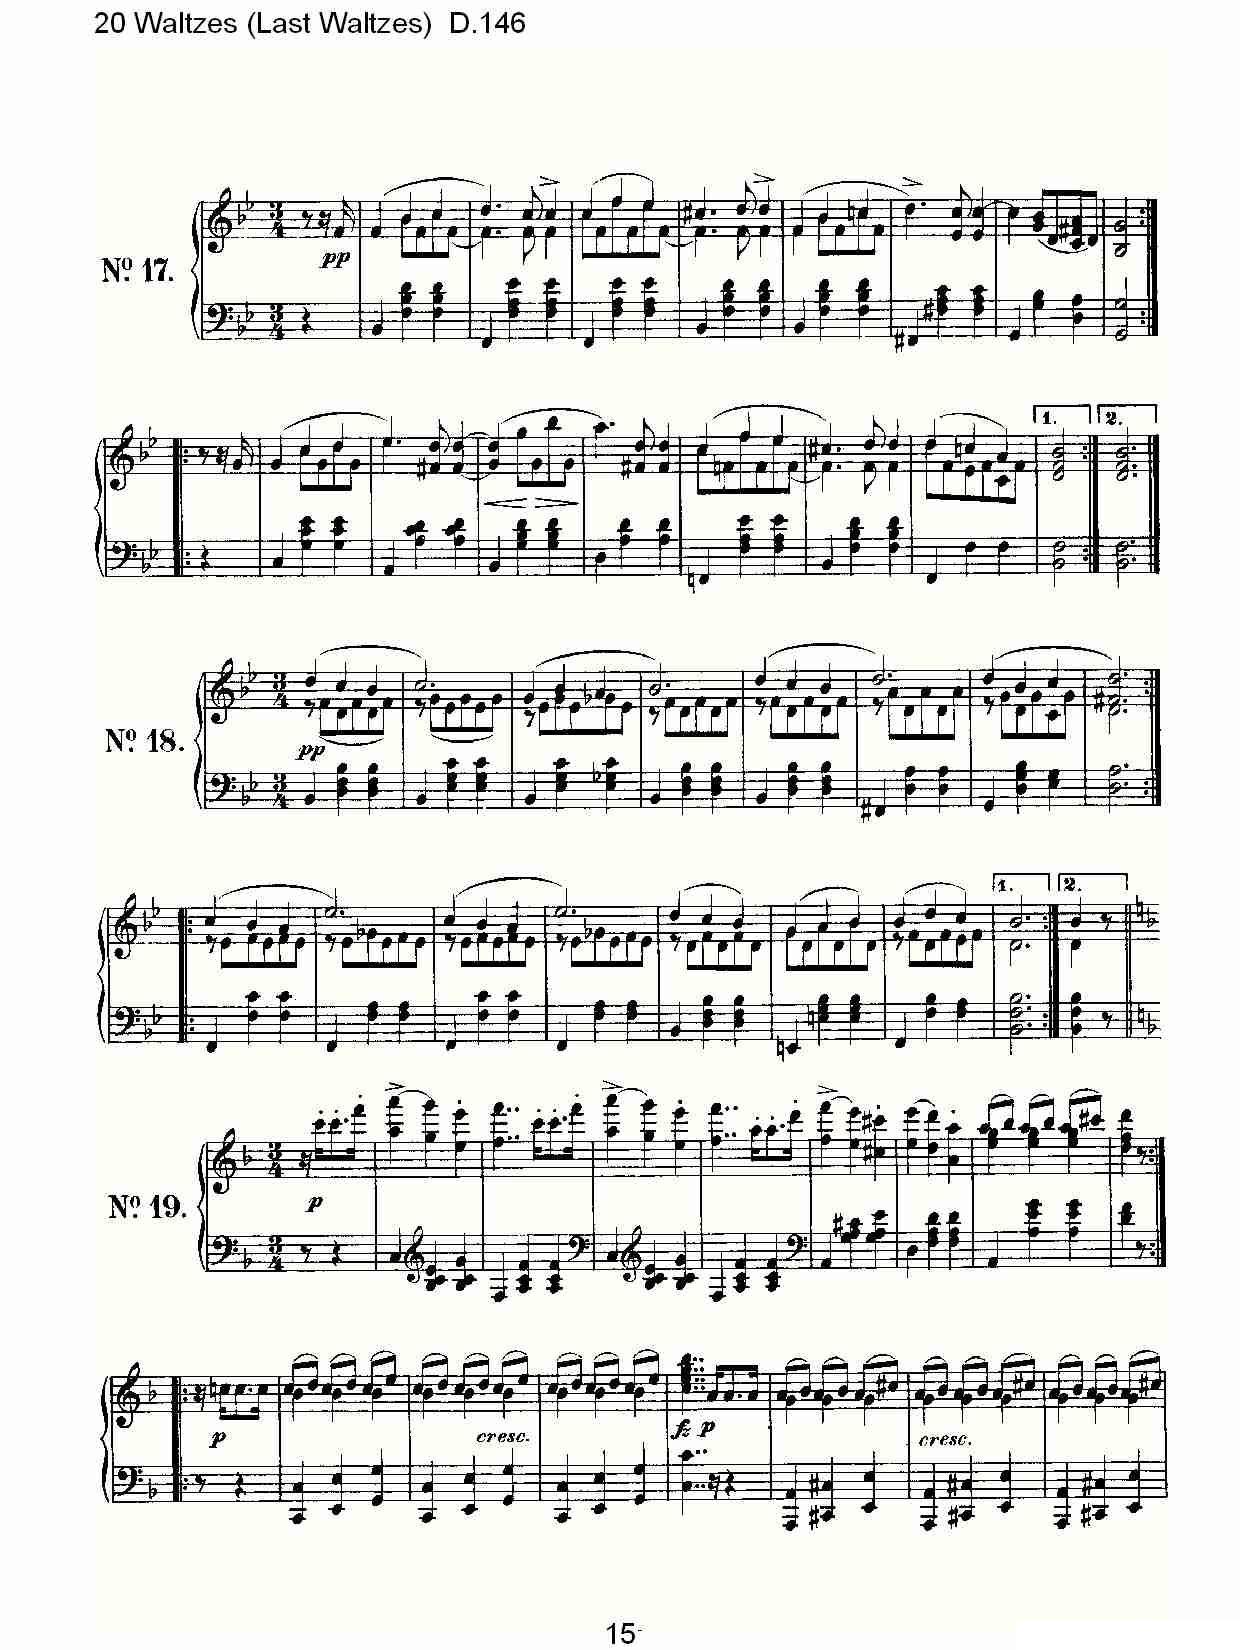 20 Waltzes（Last Waltzes) D.14）钢琴曲谱（图15）